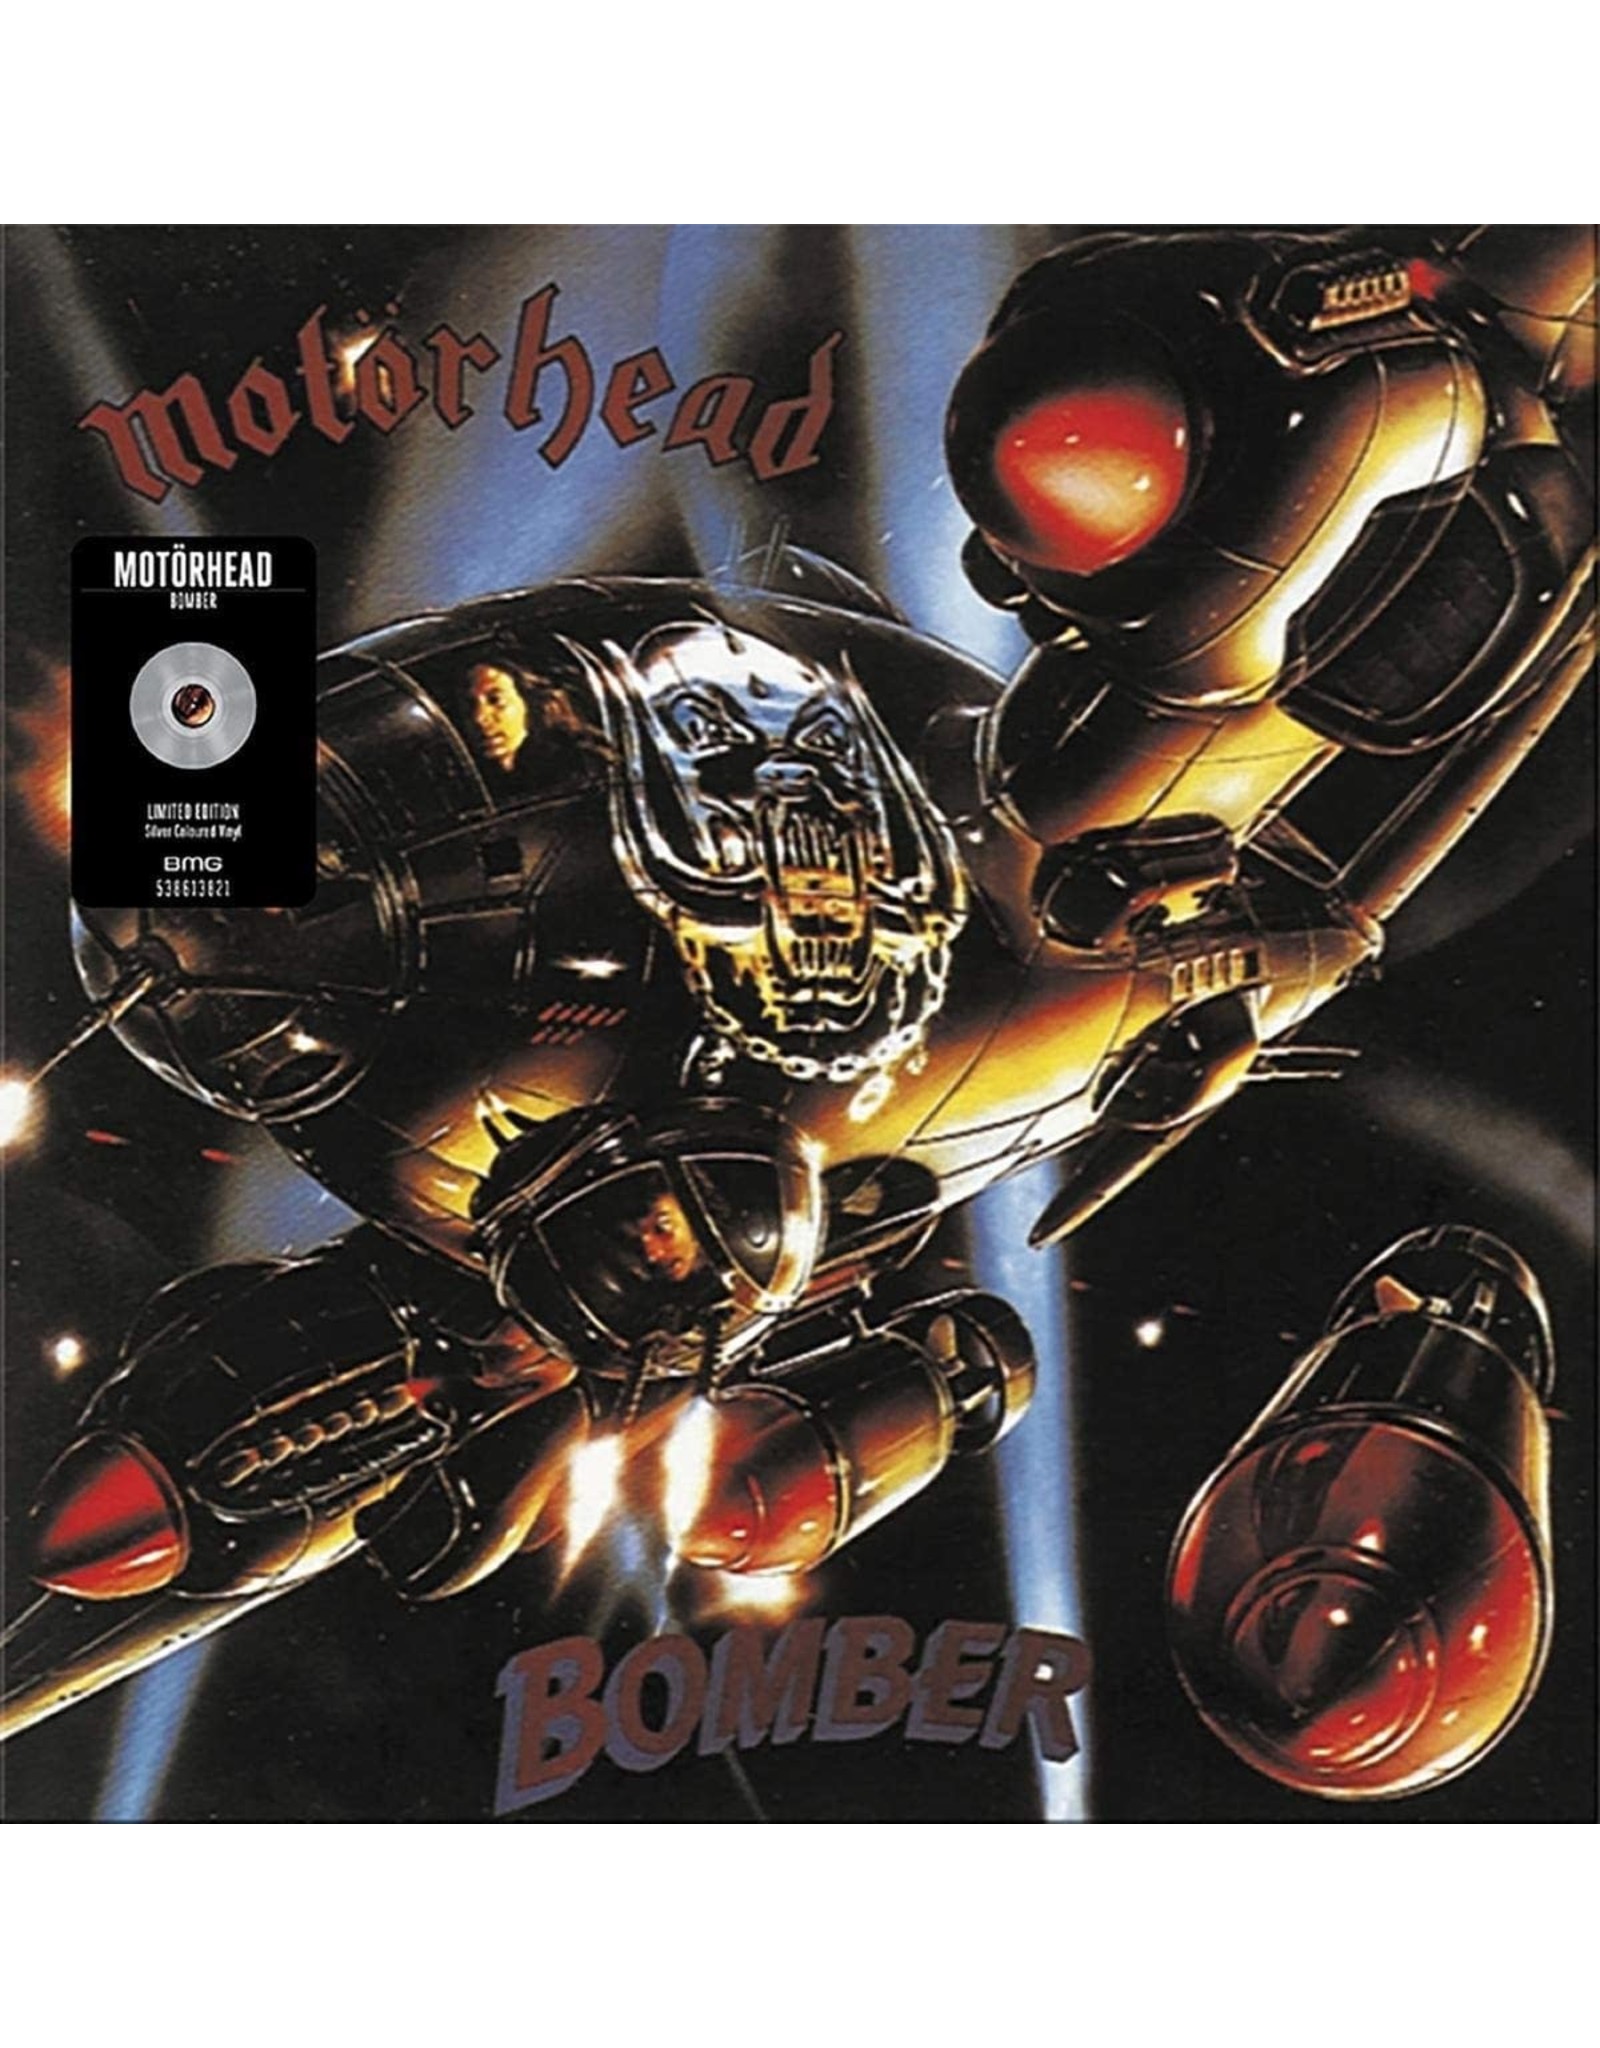 Motorhead - Bomber (Silver Vinyl)